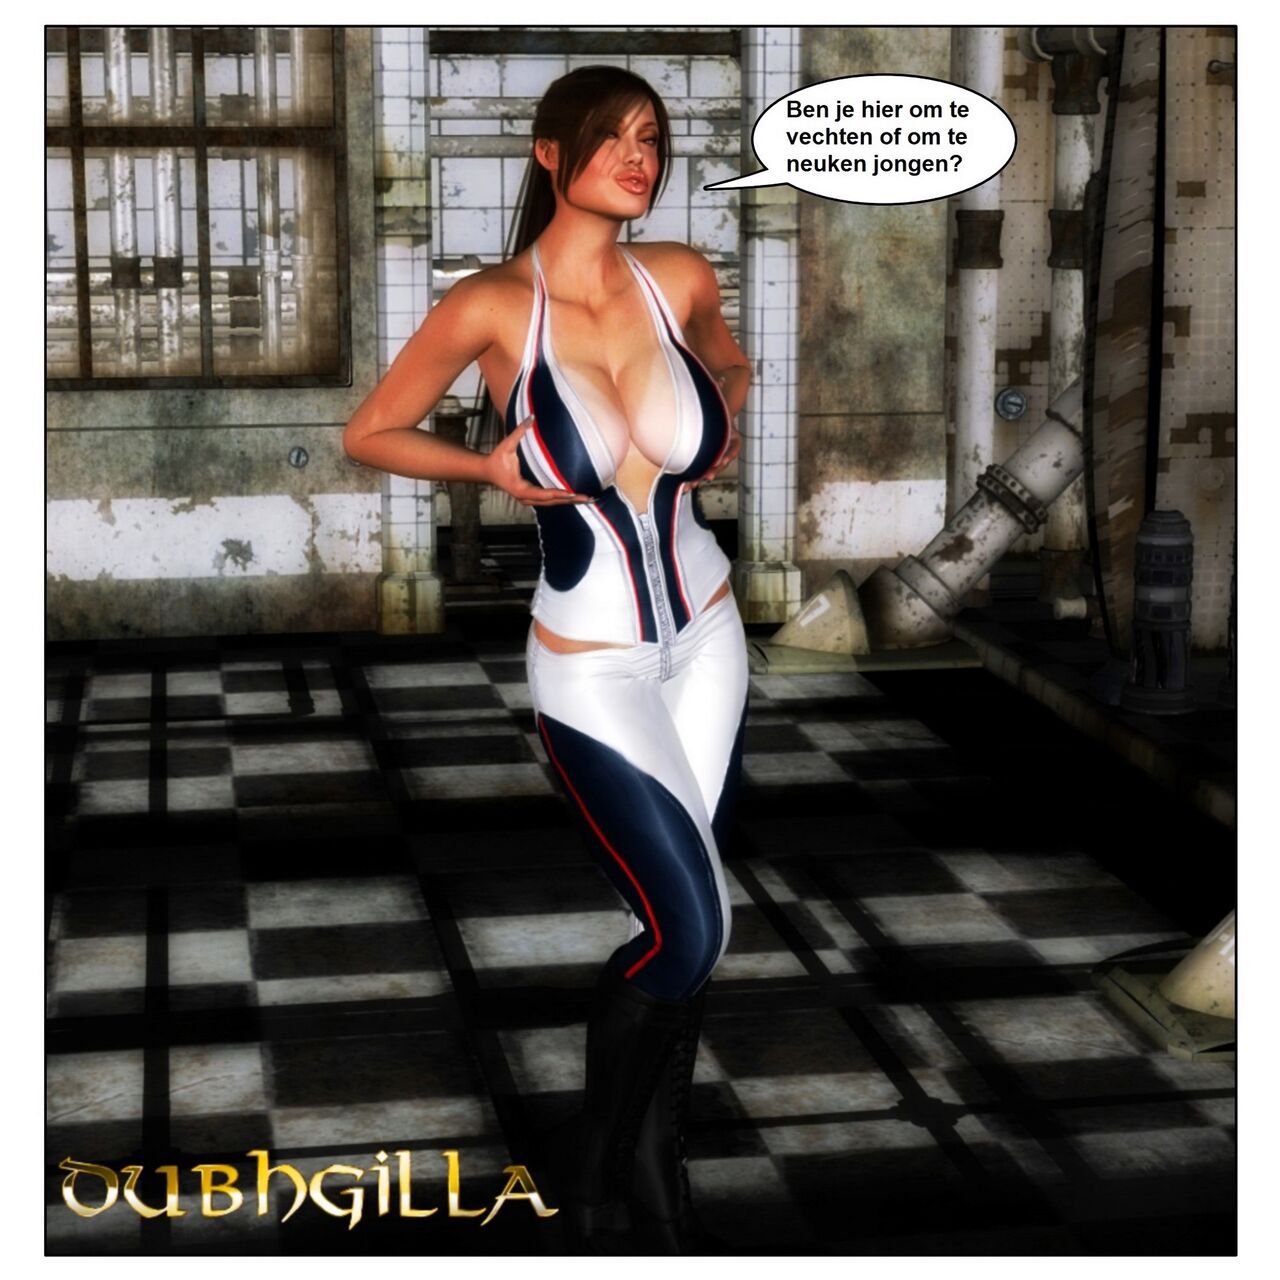 Dubhgilla - Lara Angelina fan (Dutch) 1